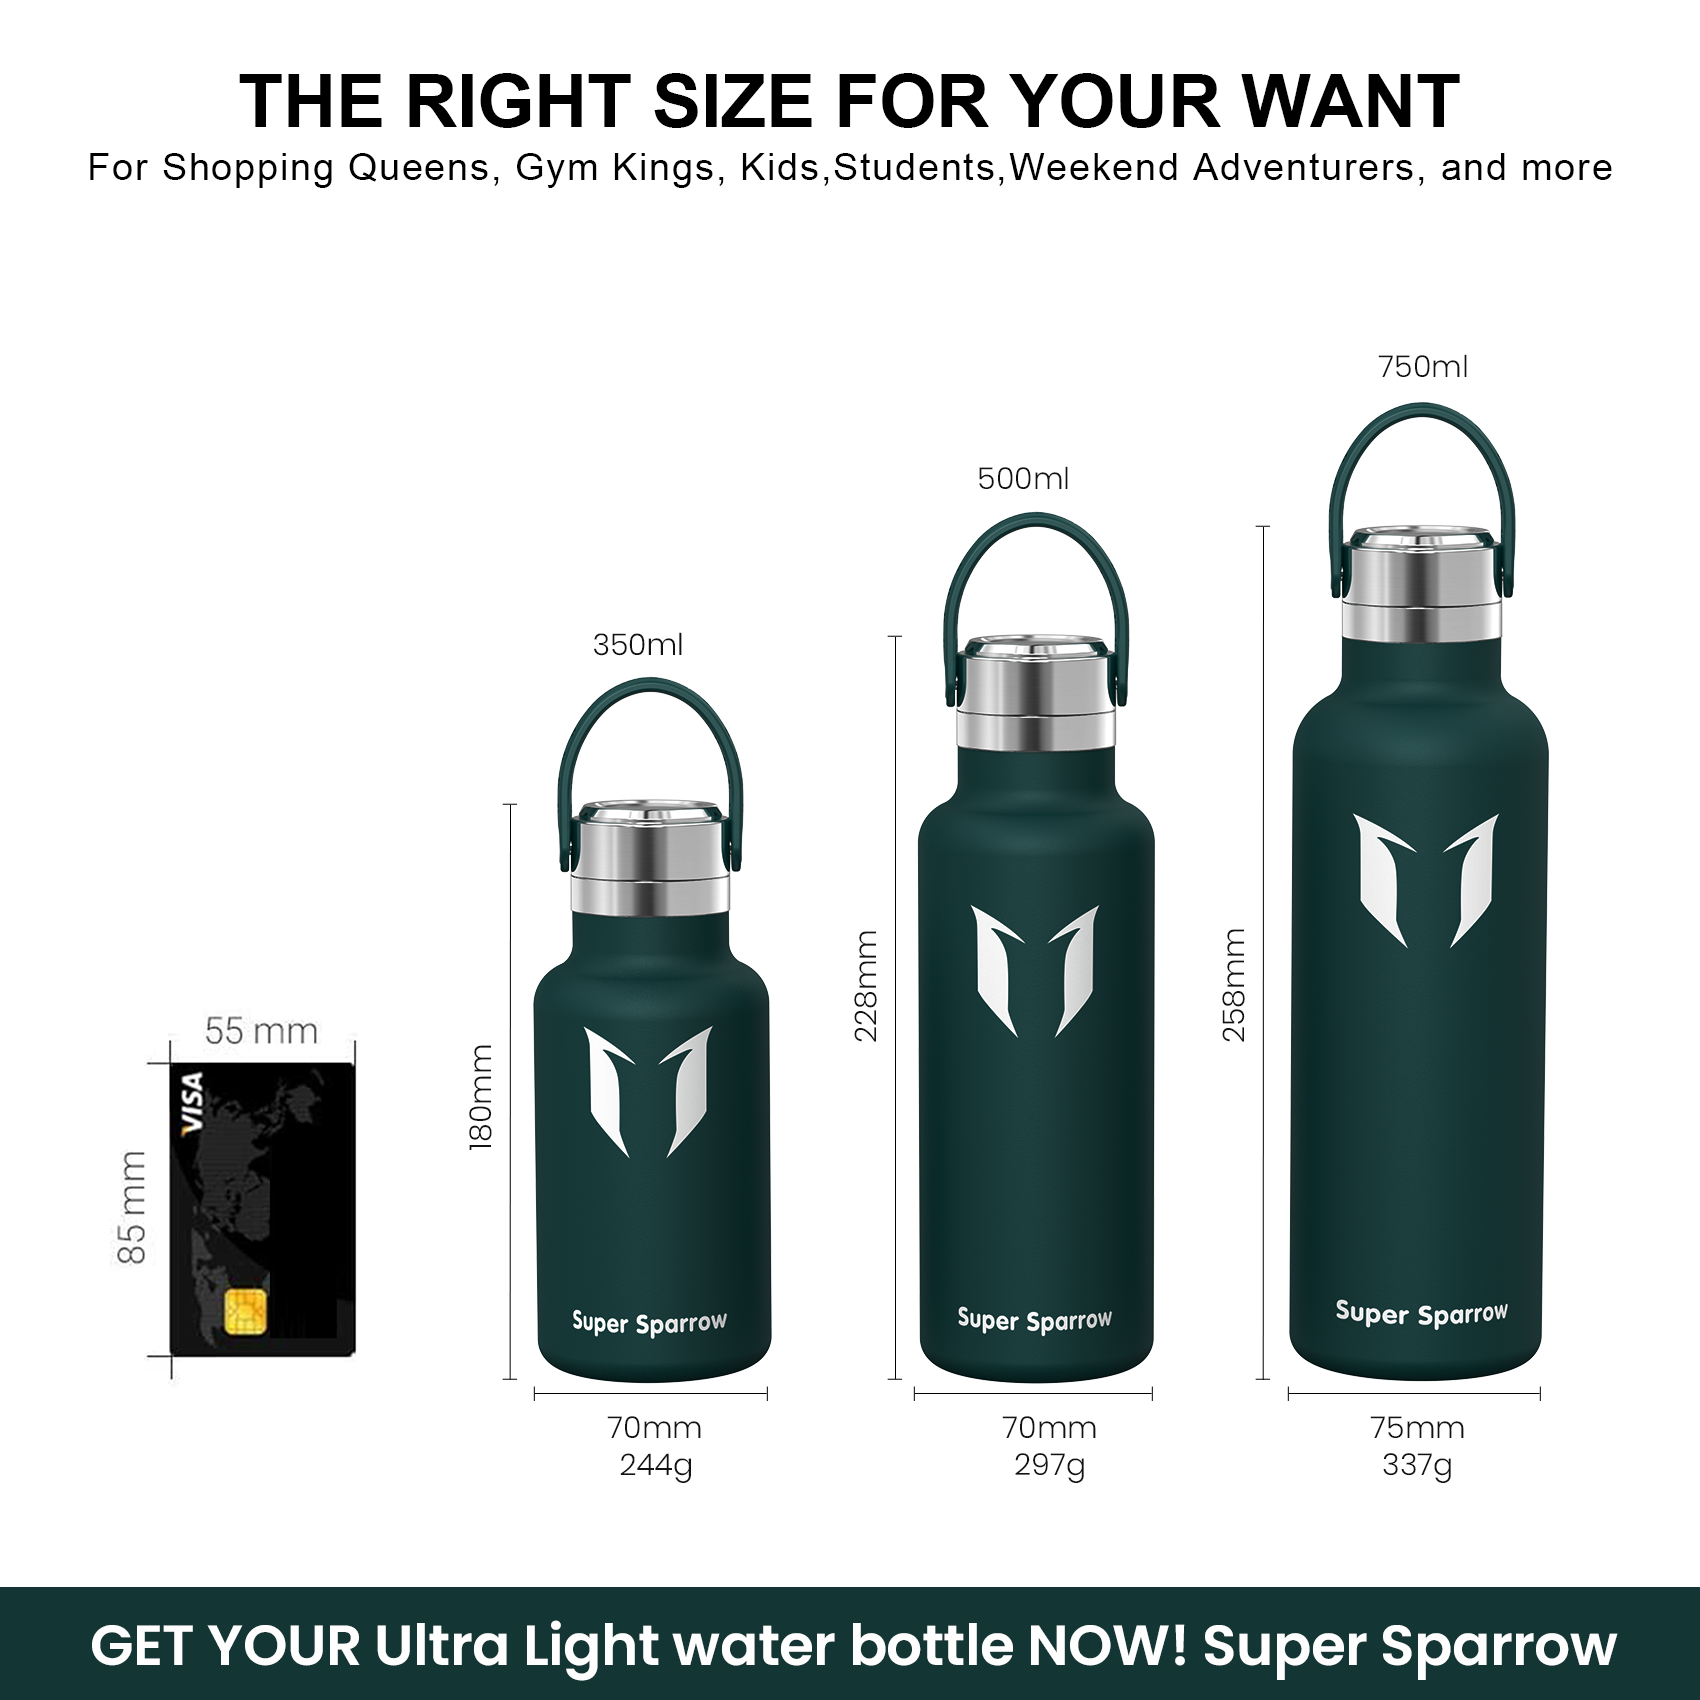 Super Sparrow water bottle collection keeps drinks both hotter and colder  for longer » Gadget Flow